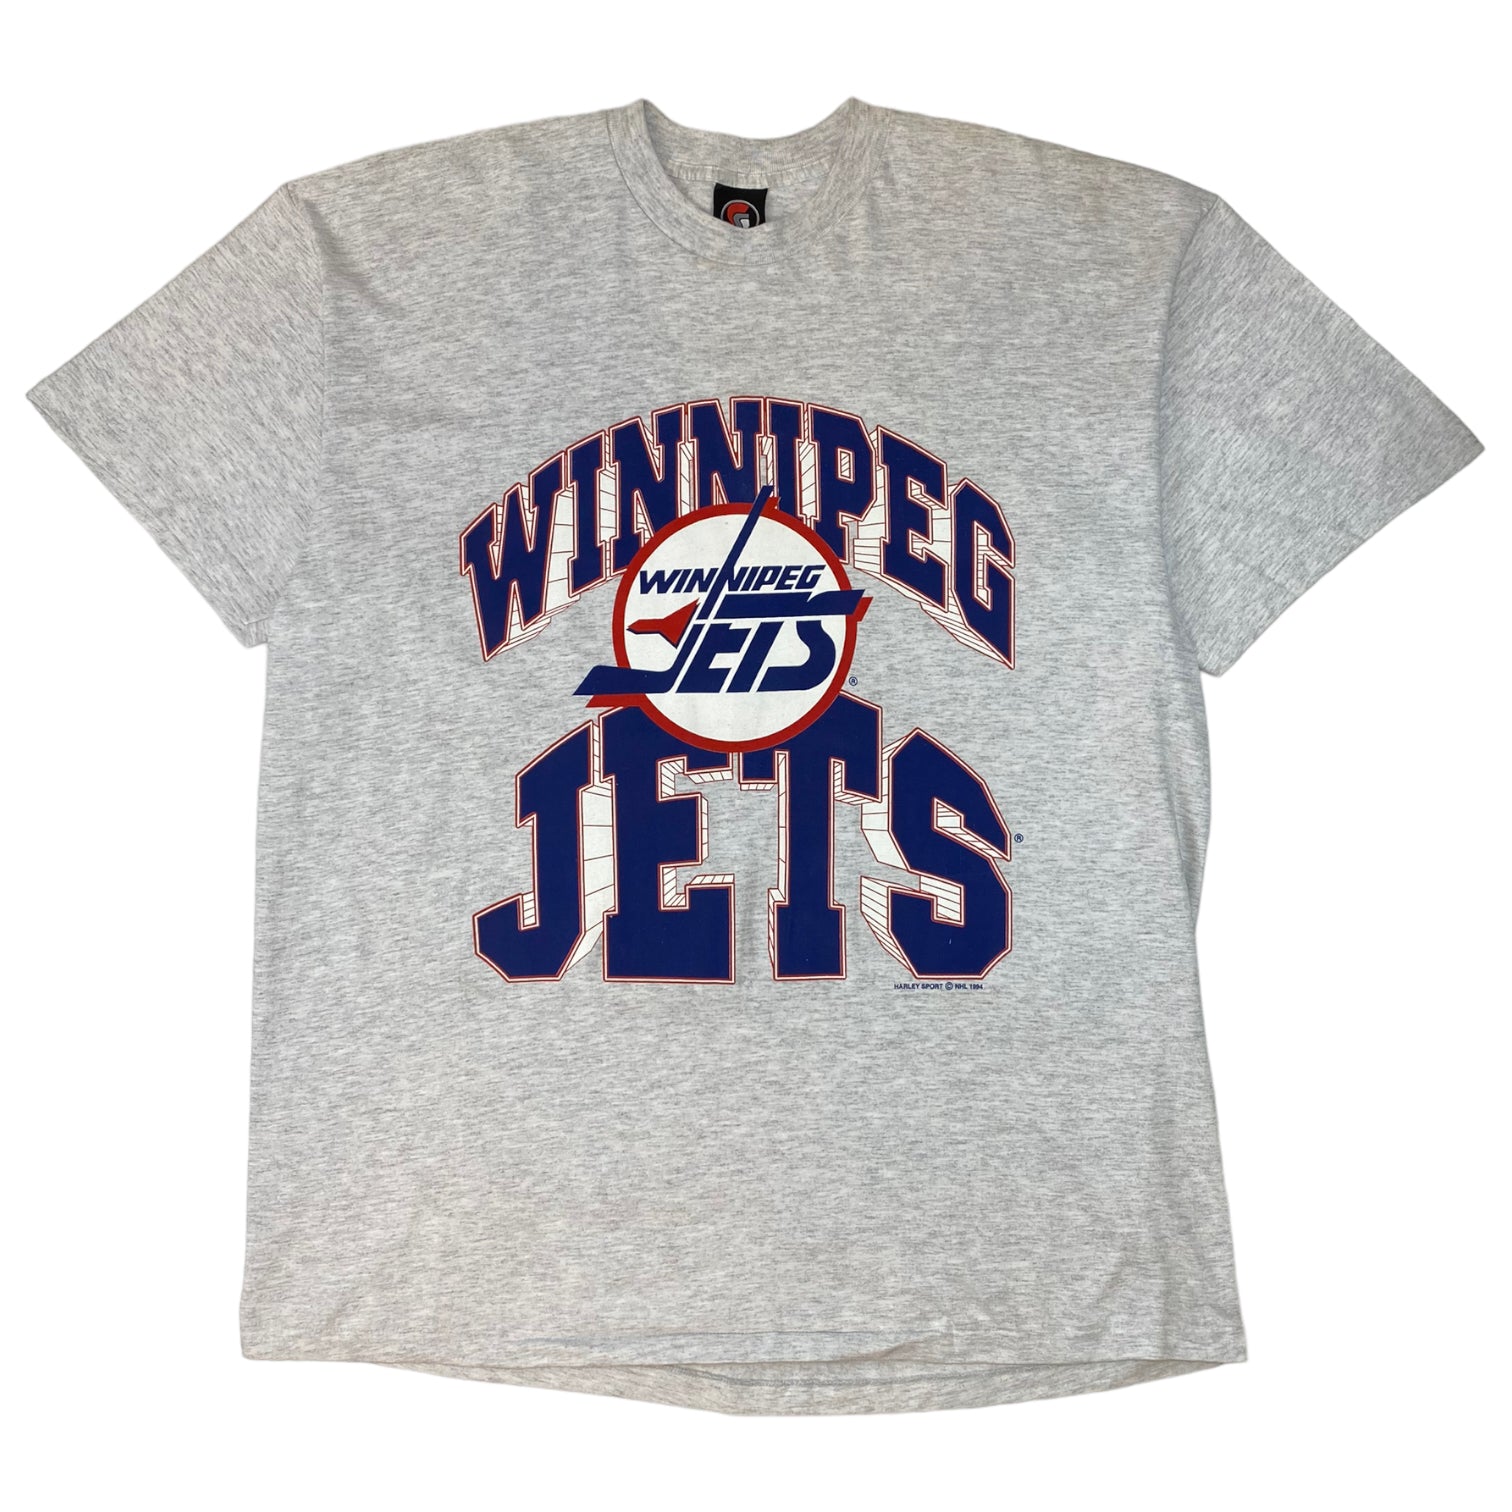 1994 Winnipeg Jets Tee Grey